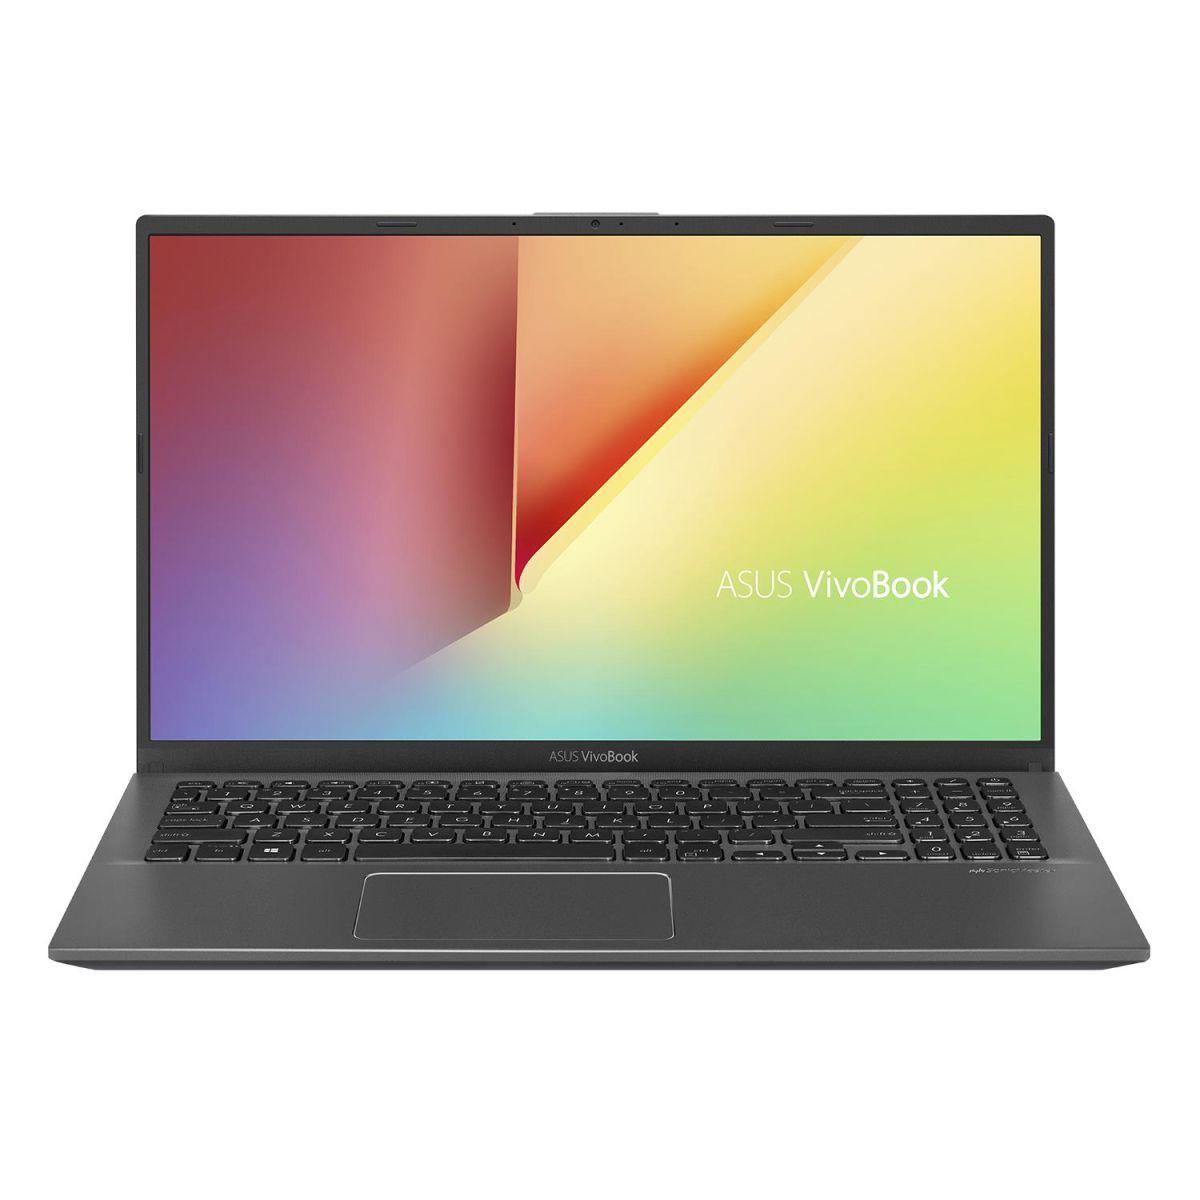 Asus VivoBook 15.6in Ryzen 3200U 8GB 128GB Notebook Laptop for $276